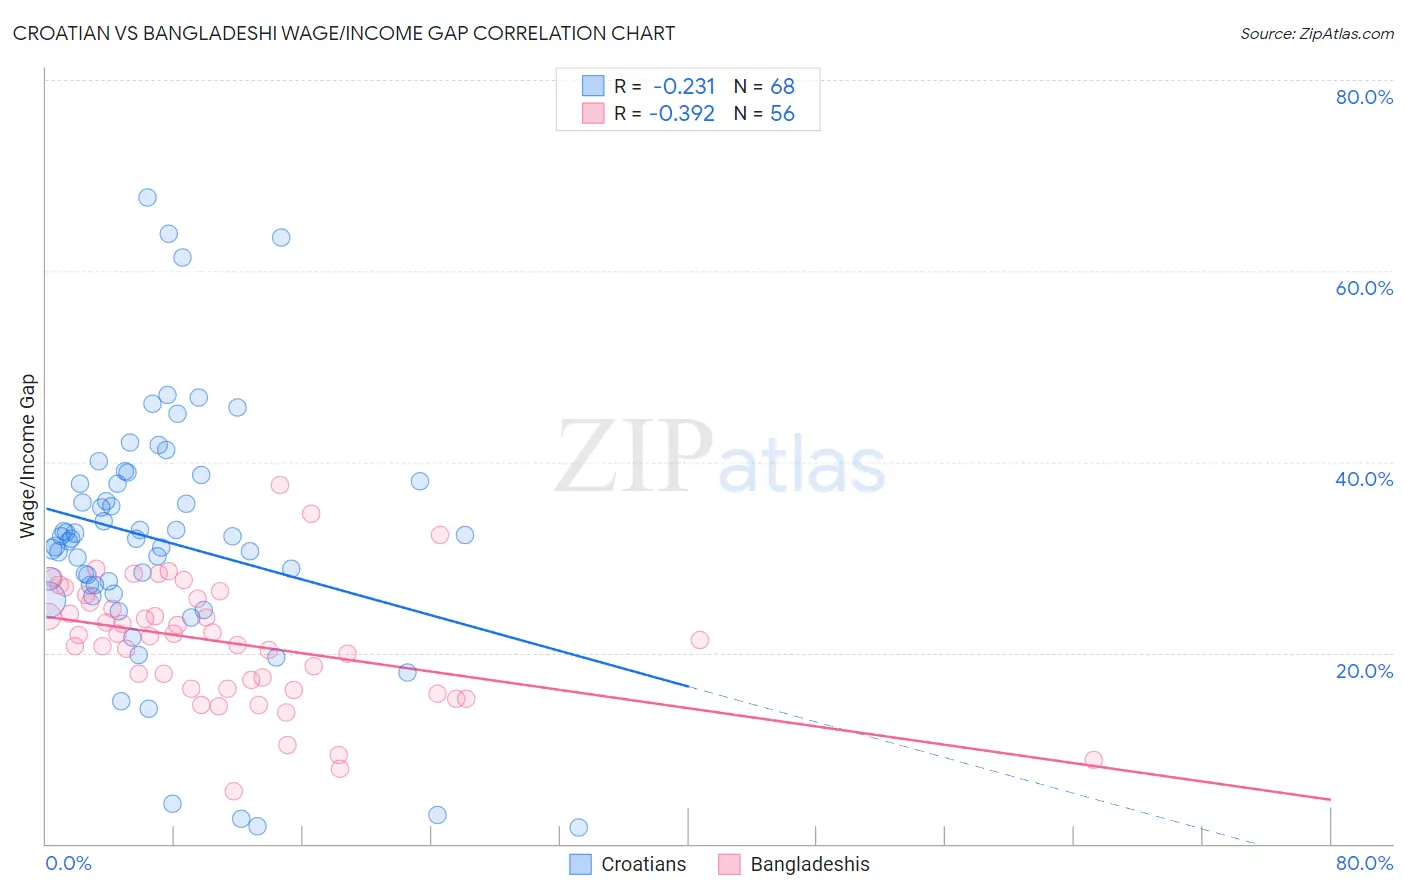 Croatian vs Bangladeshi Wage/Income Gap